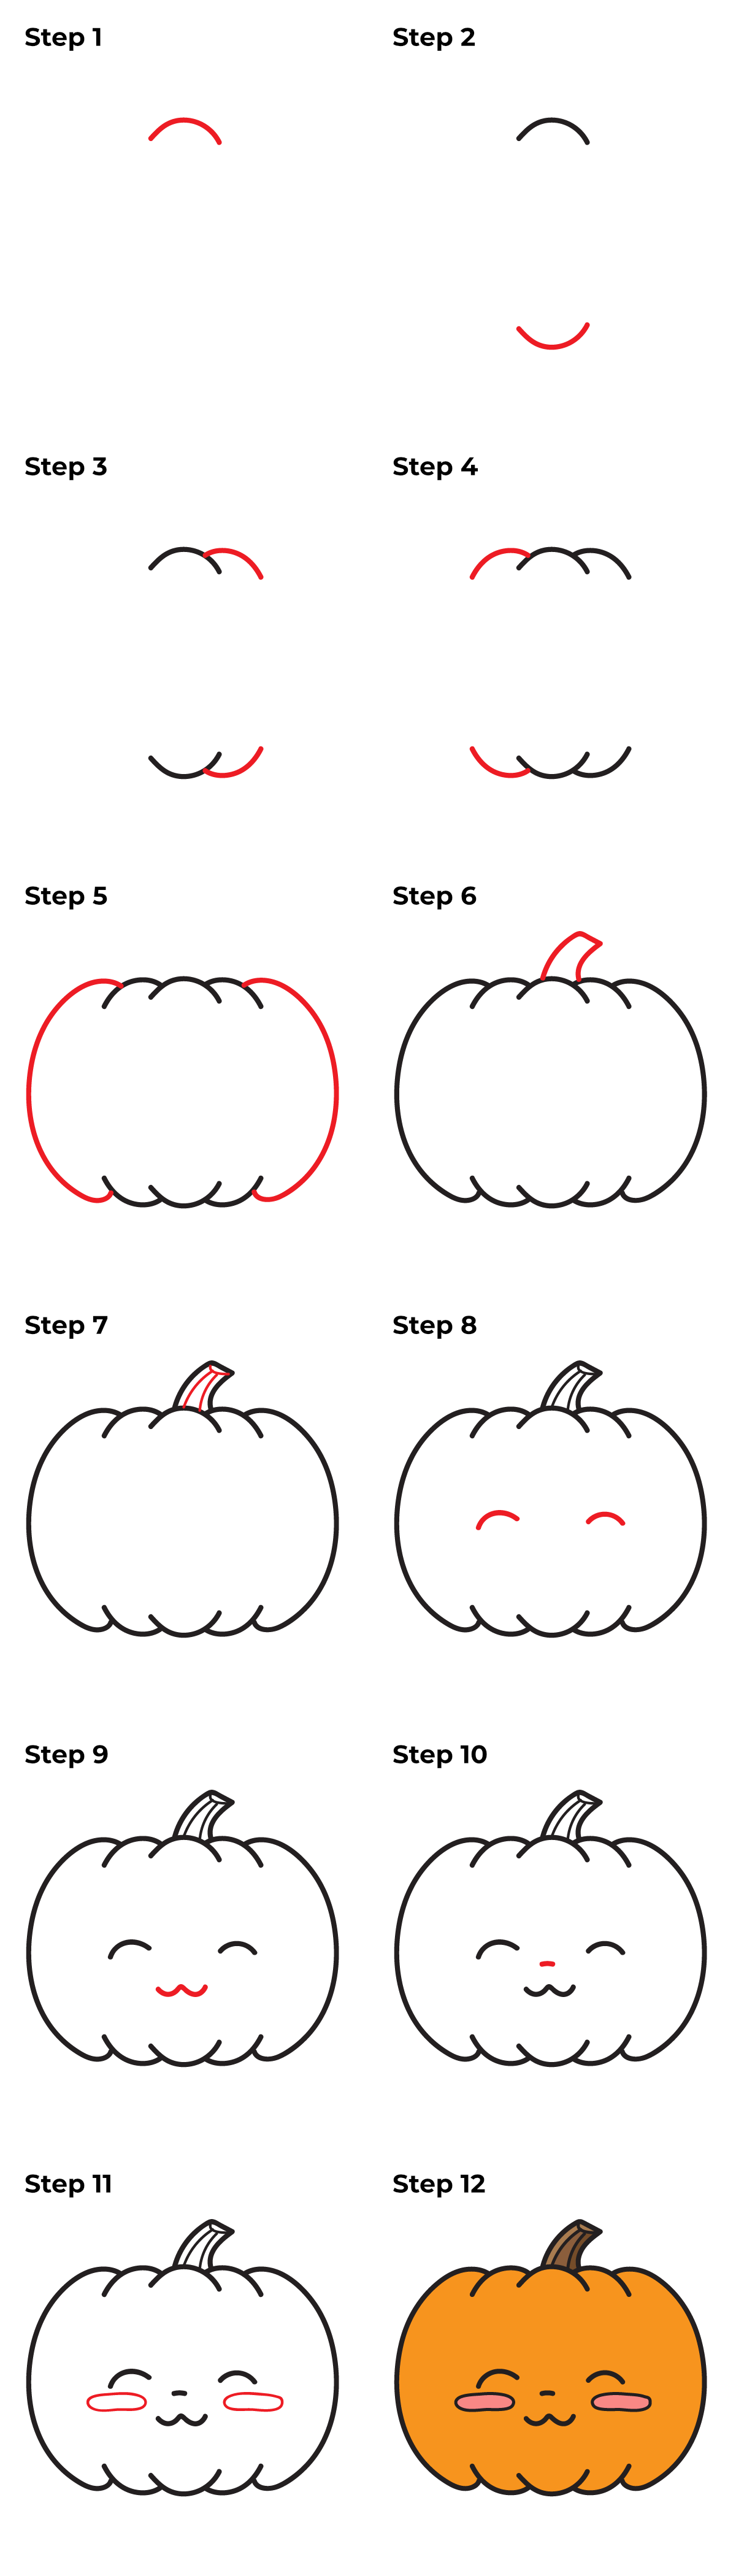 How to Draw a Cute Pumpkin - Printable Tutorial